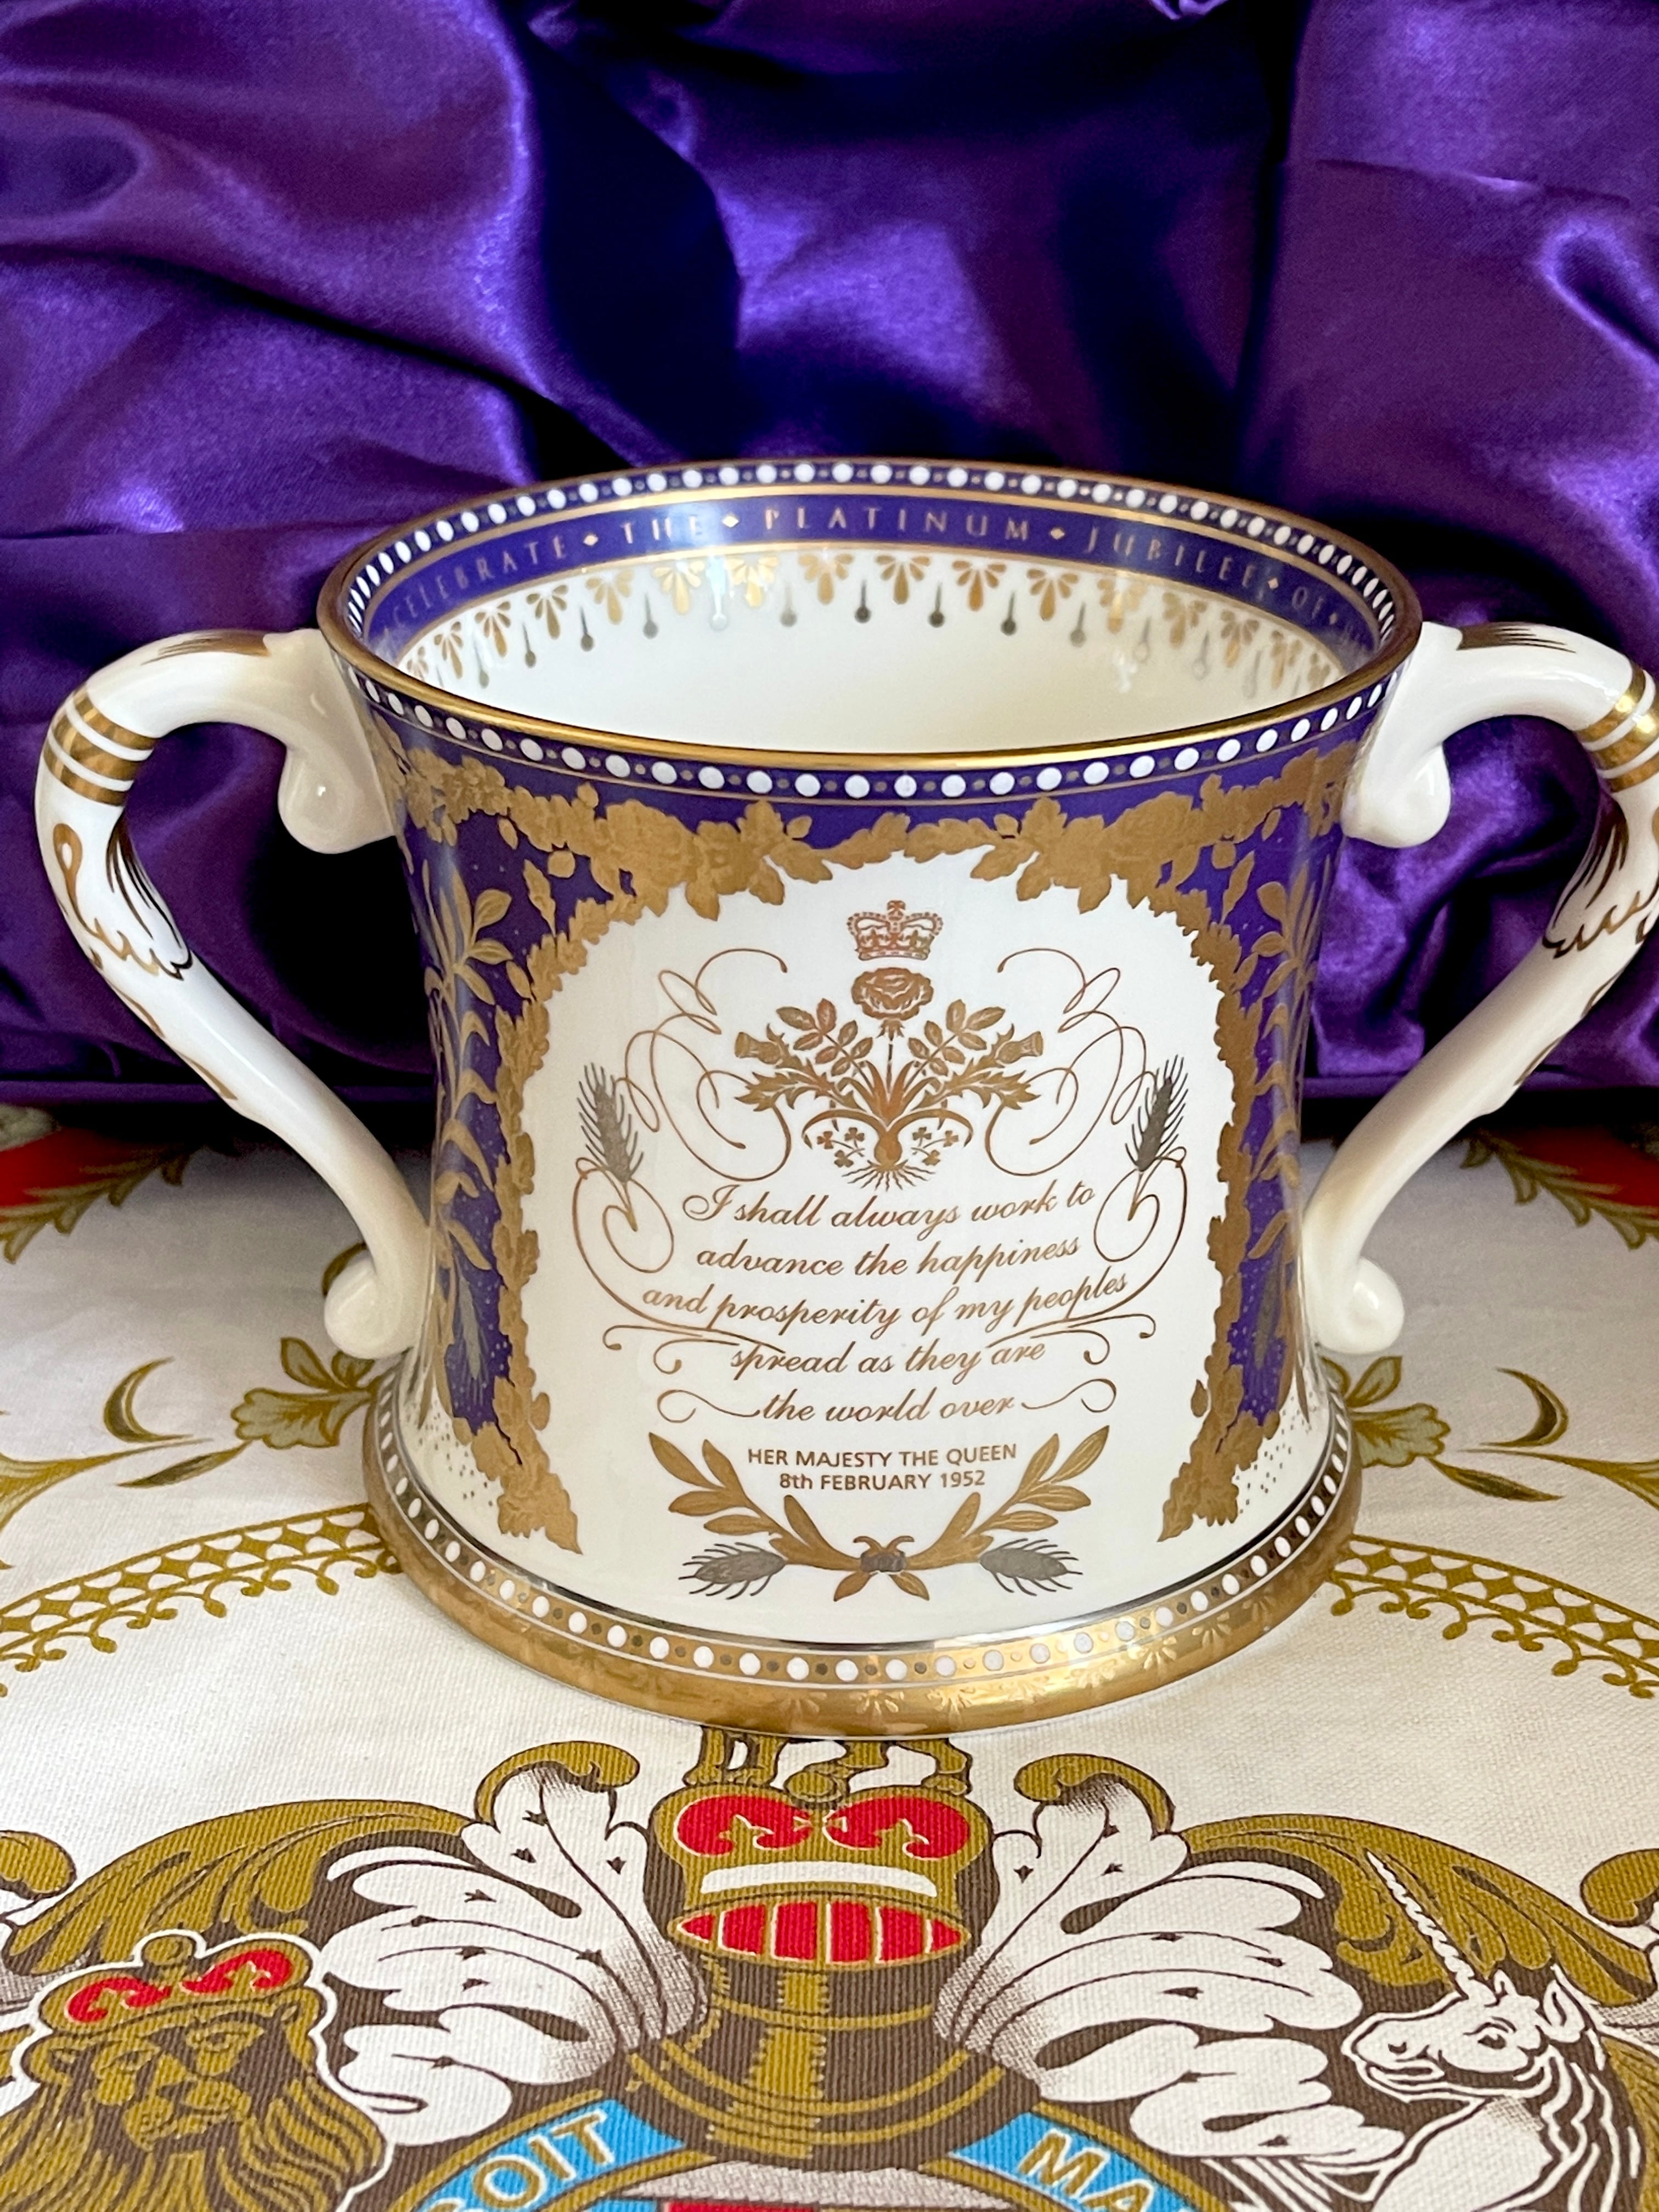 30%OFF! ◆エリザベス女王 70th記念  リミテッドエディション プラチナジュビリー  The Queen's Platinum Jubilee Loving Cup Limited Edition